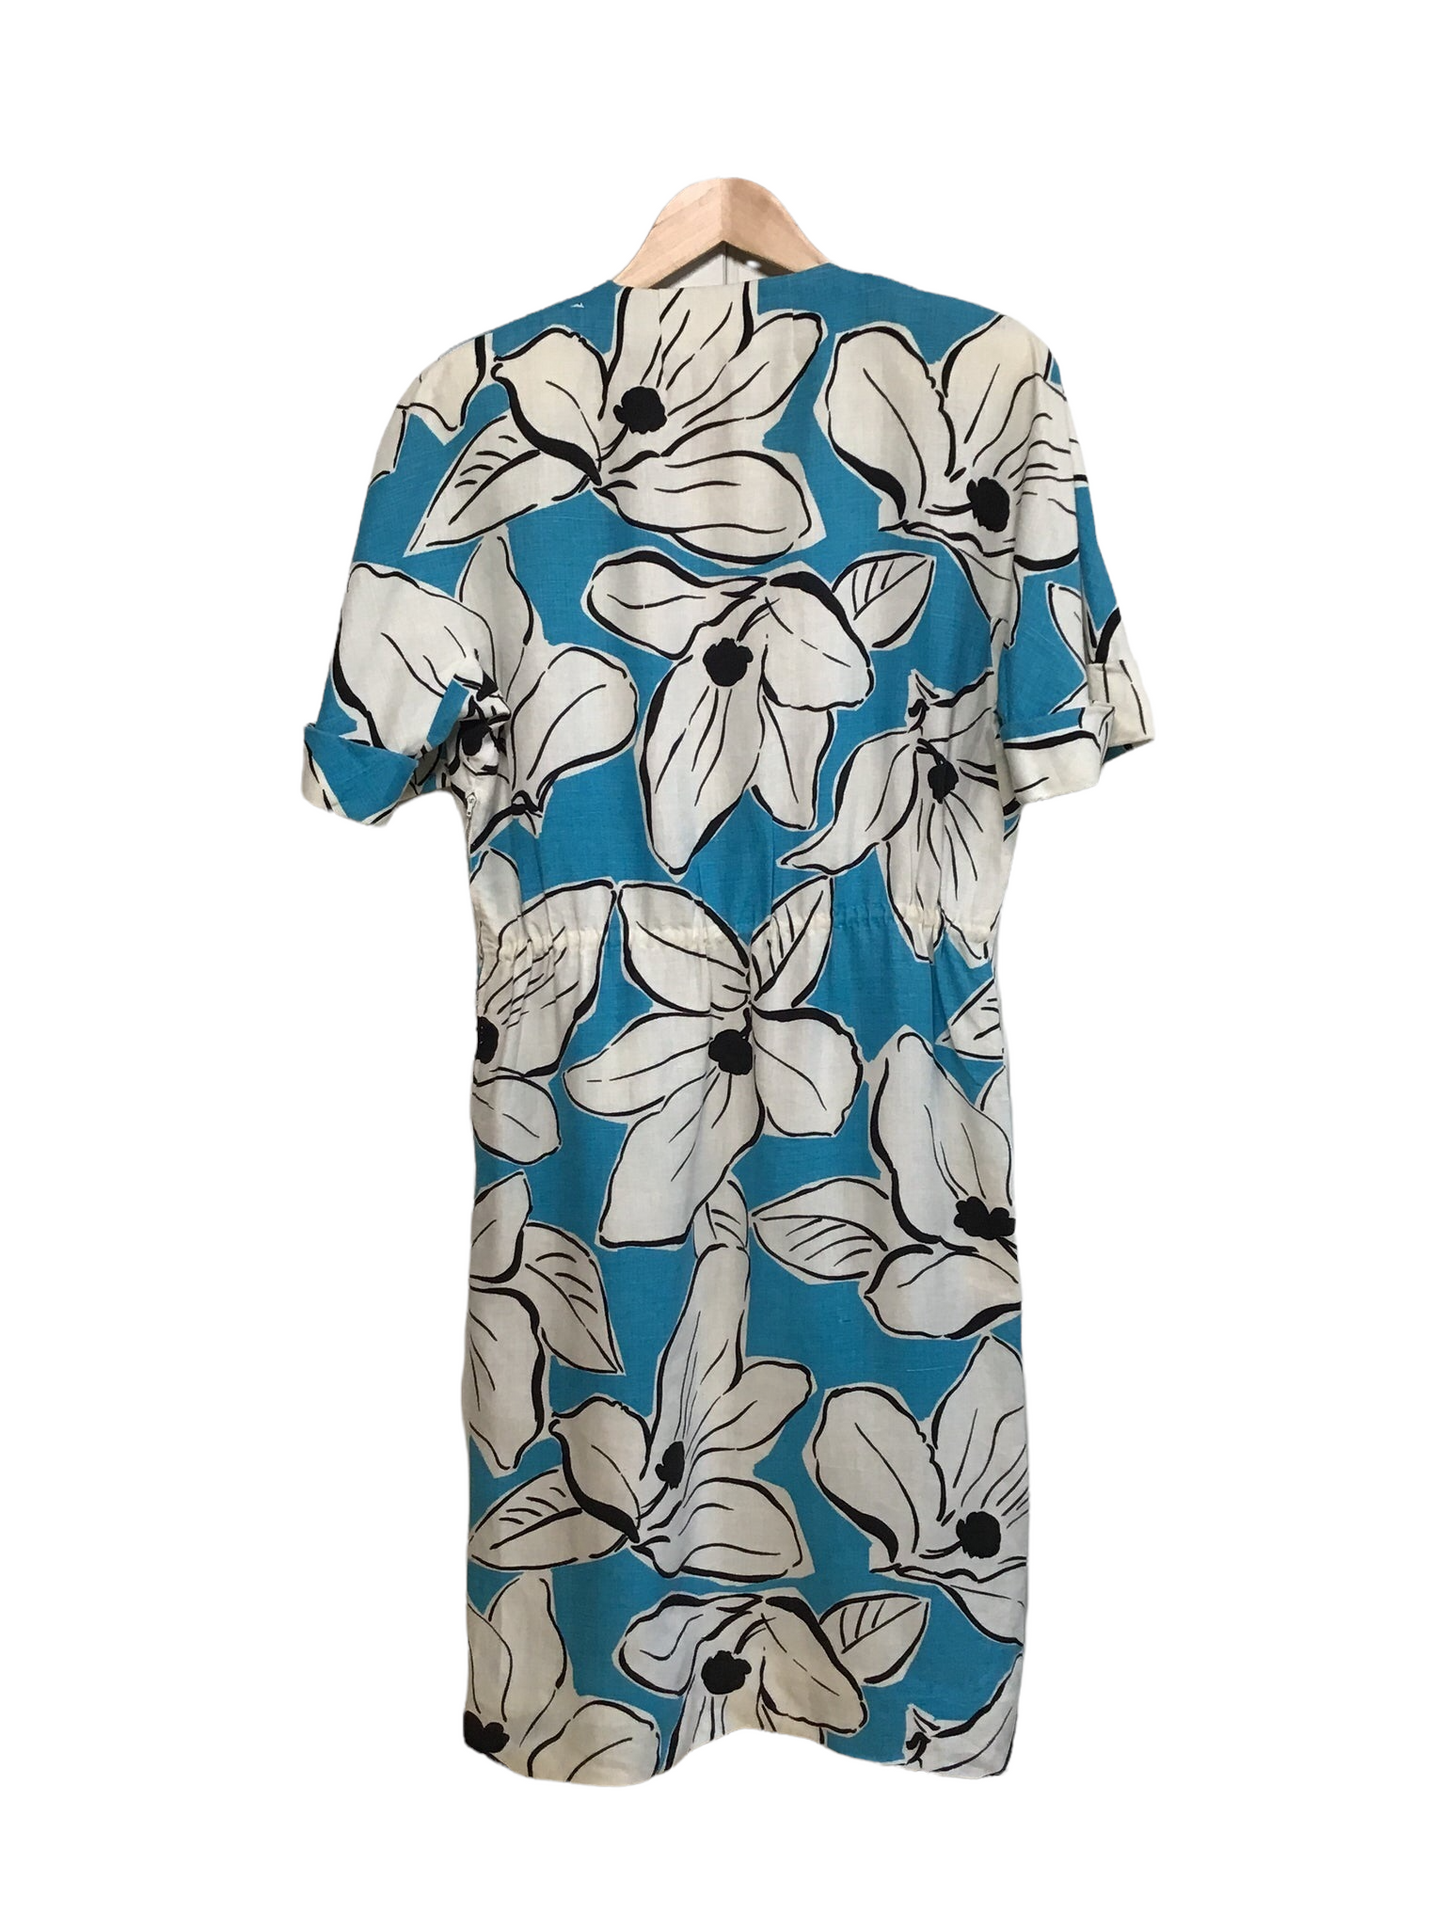 Pierucci Floral Summer Dress (Size L)